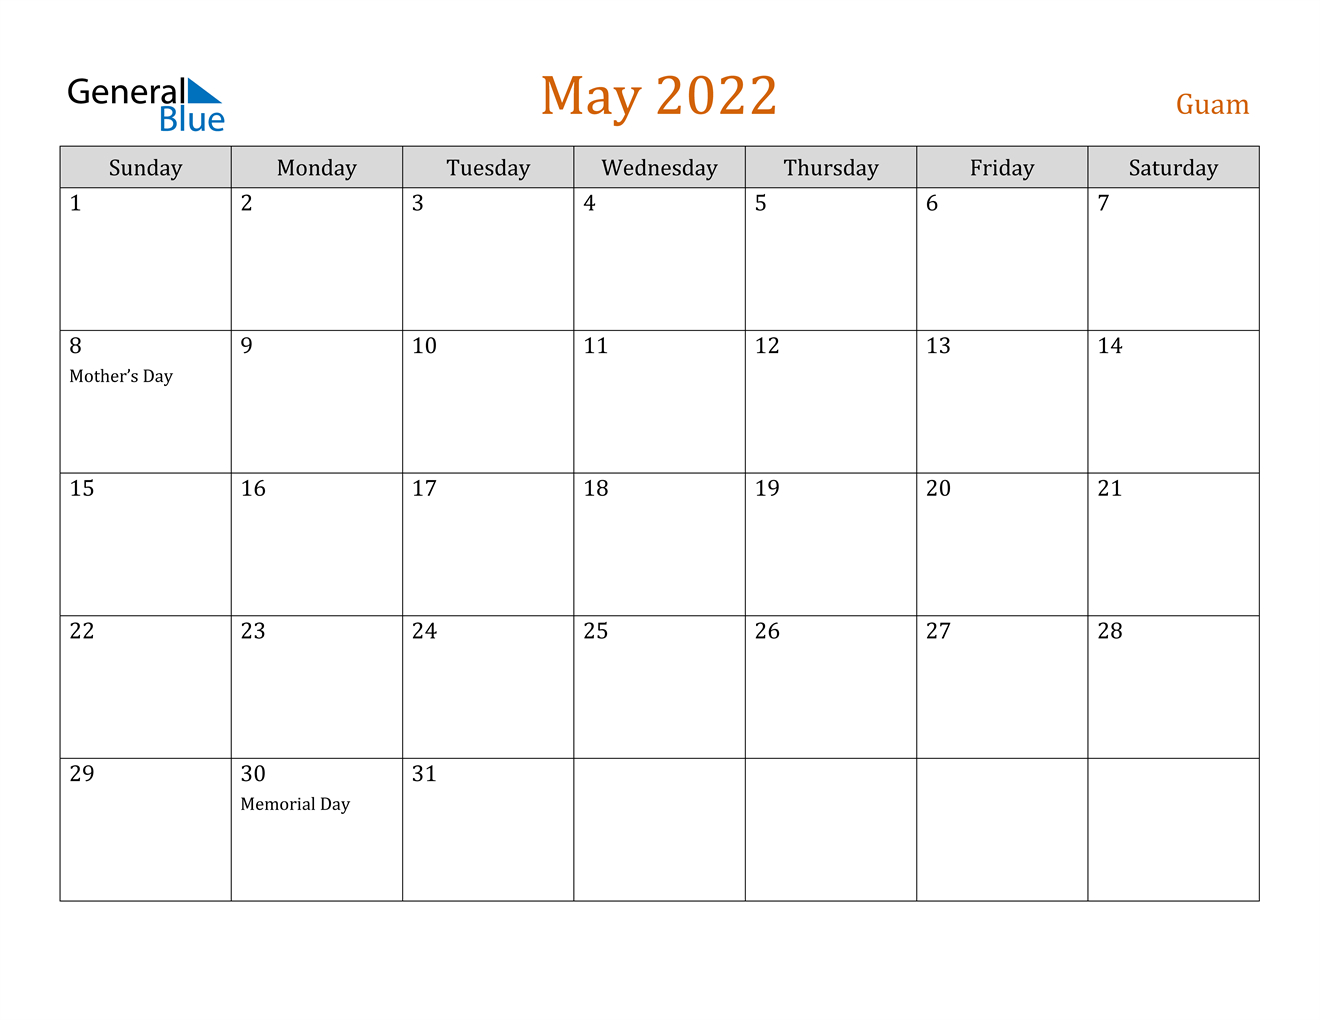 May 2022 Calendar - Guam  Printable Calendar 2022 May